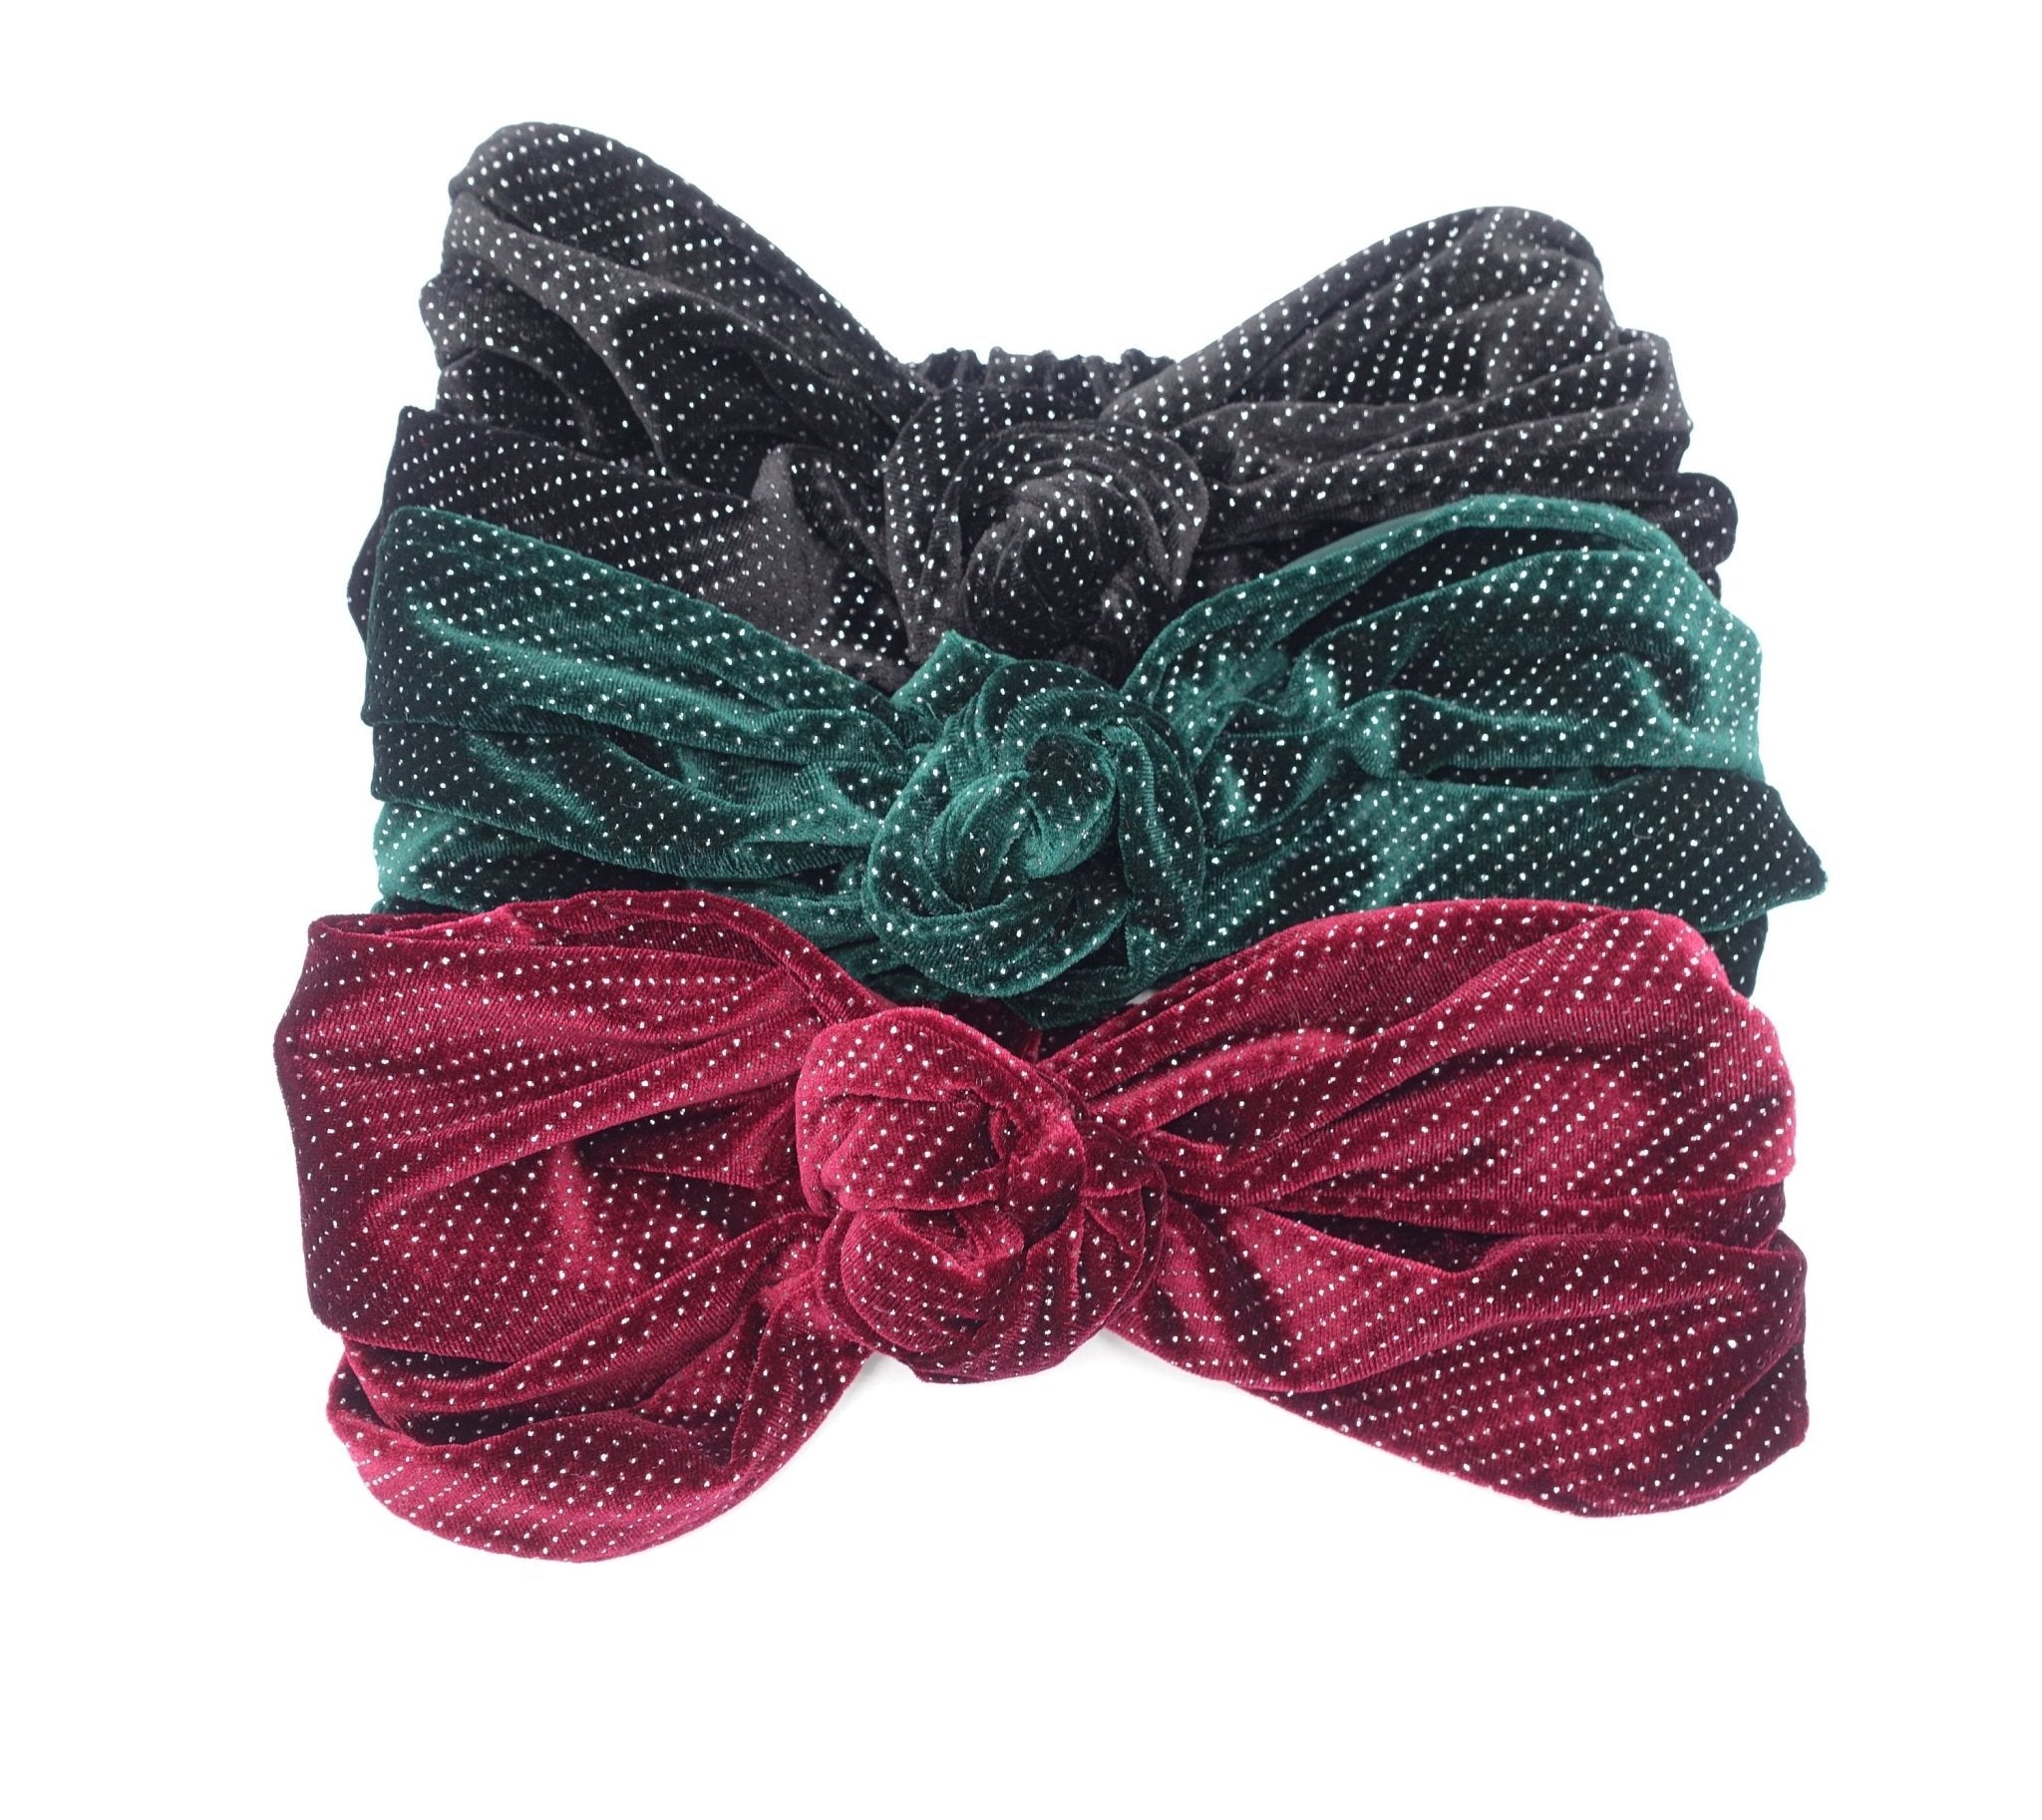 glittering velvet circle knot hair turban headband stylish Fall Winter hairband for women